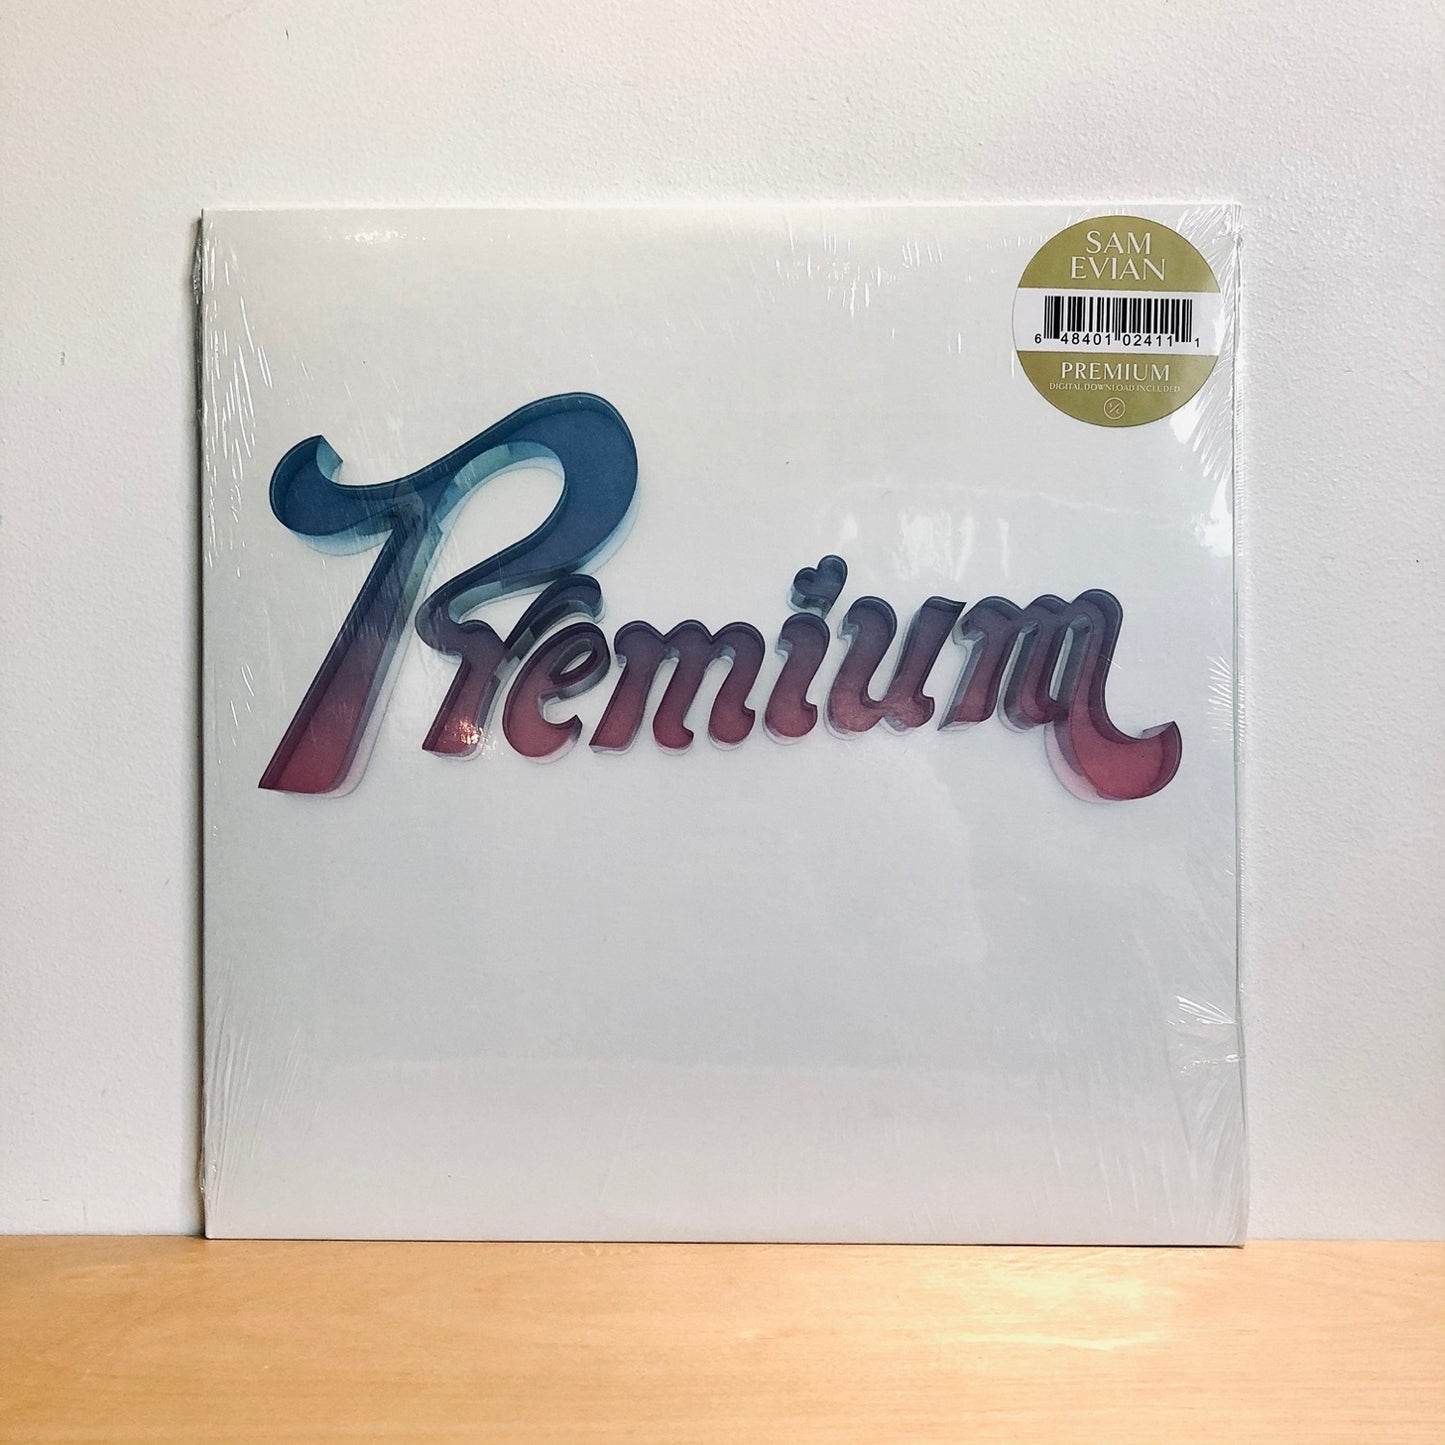 Sam Evian - Premium. LP (Ltd. Clear Vinyl Edition)